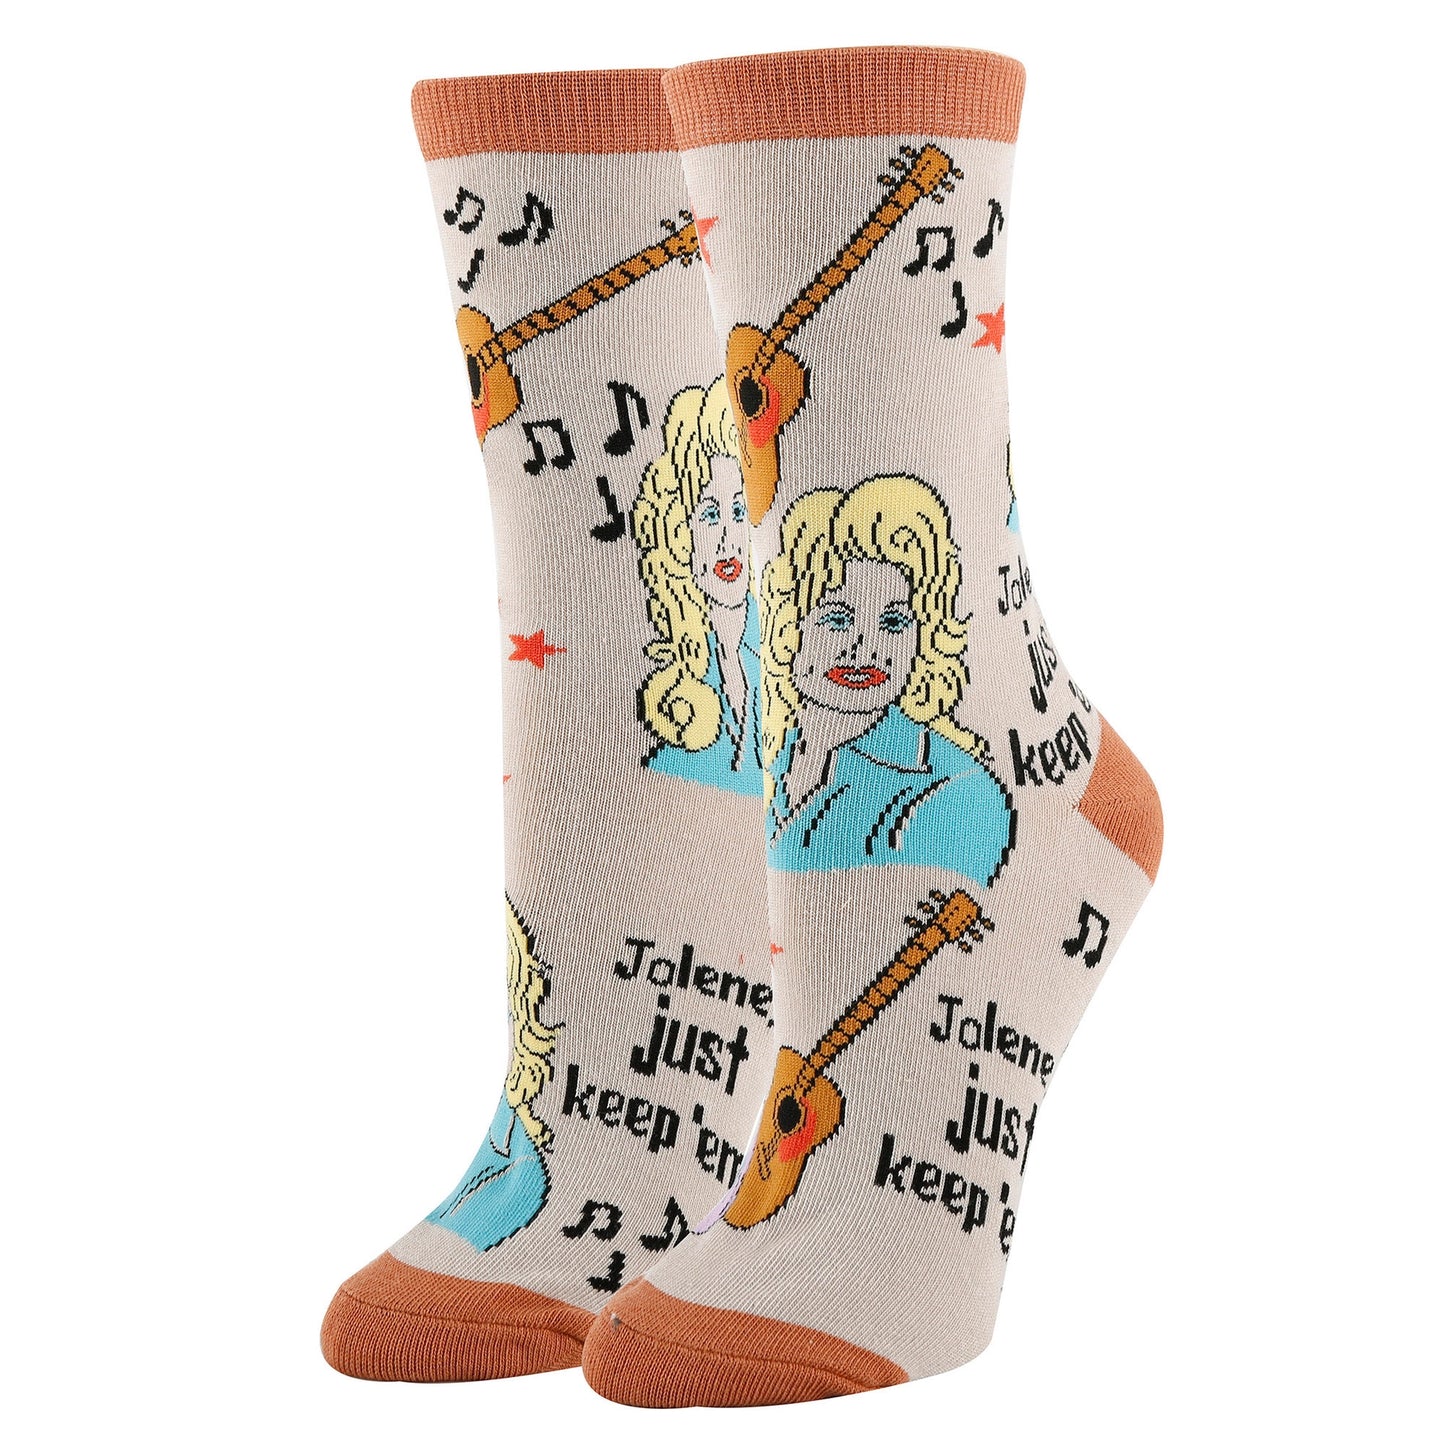 Oooh Yeah Socks - Just Keep 'em | Women's Jolene Funny Crew Socks